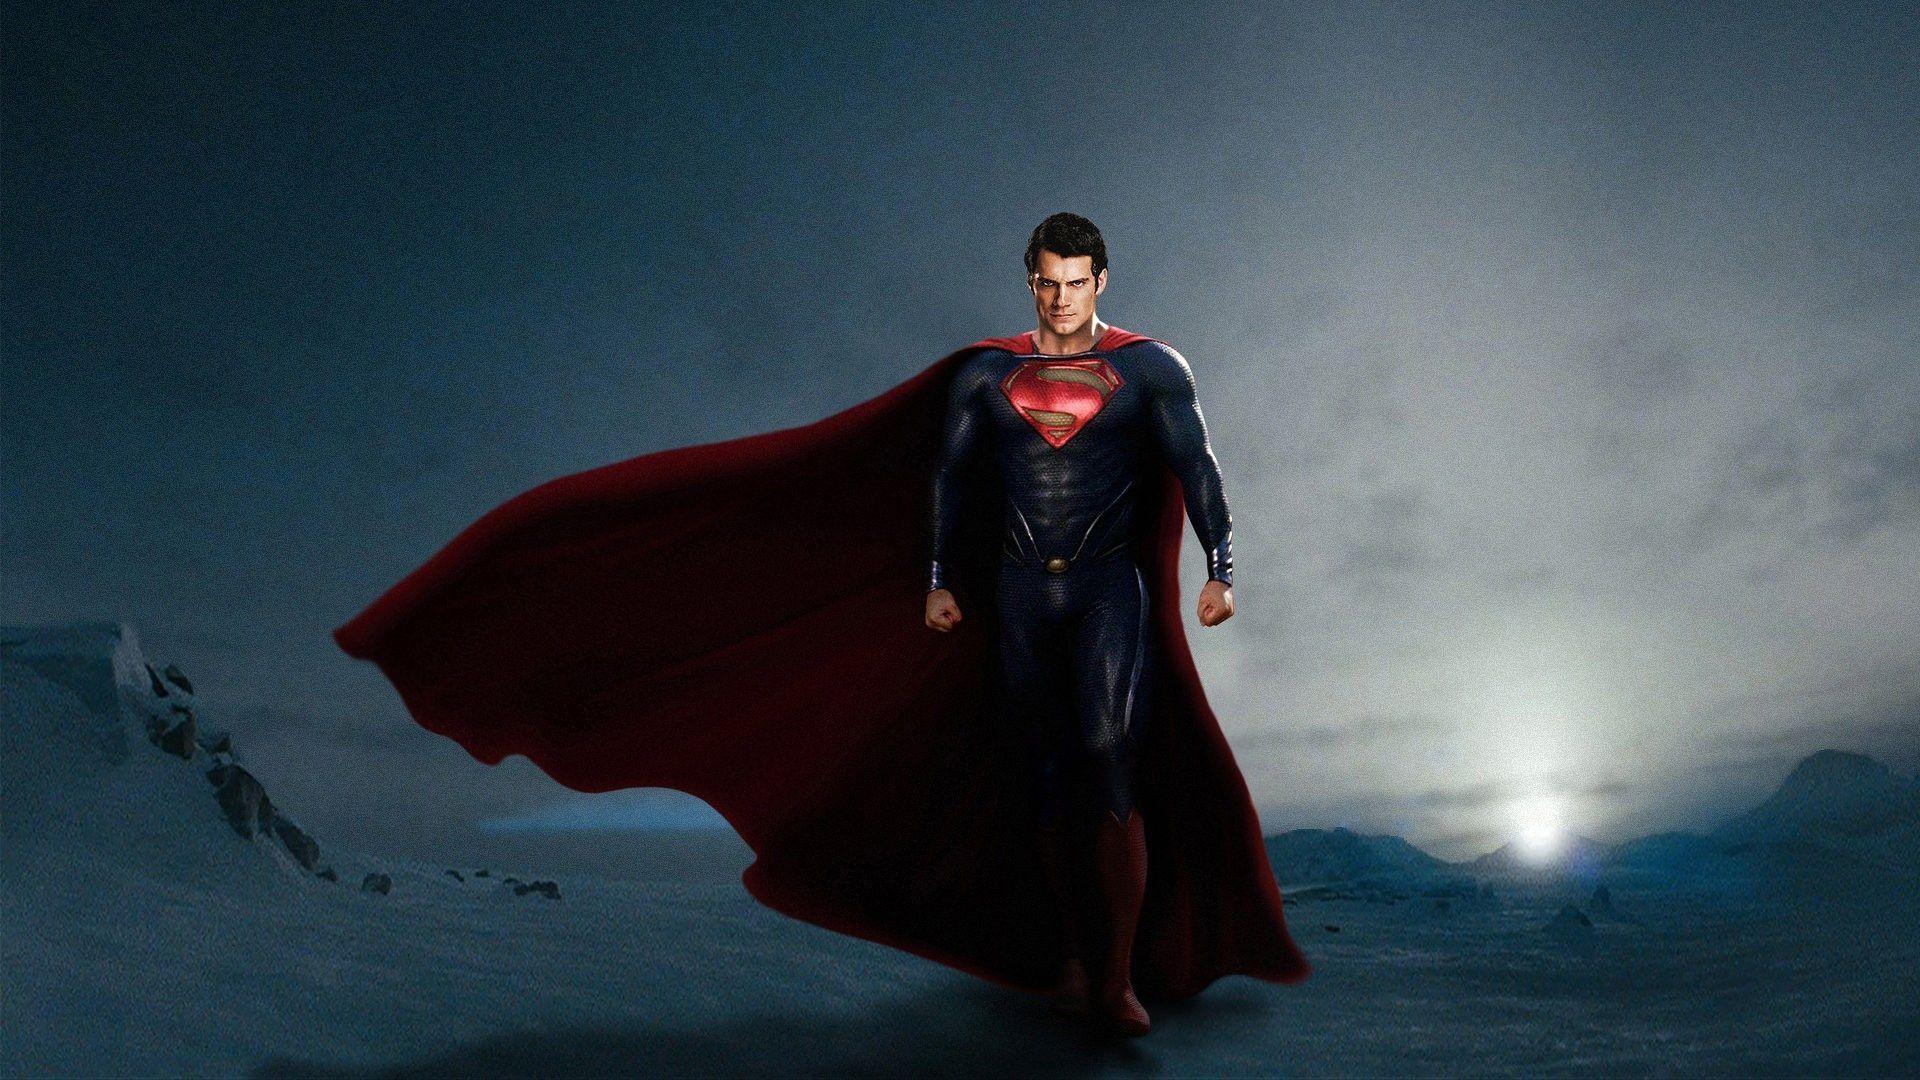 Superman - Superman (The Movie) Wallpaper (20439202) - Fanpop